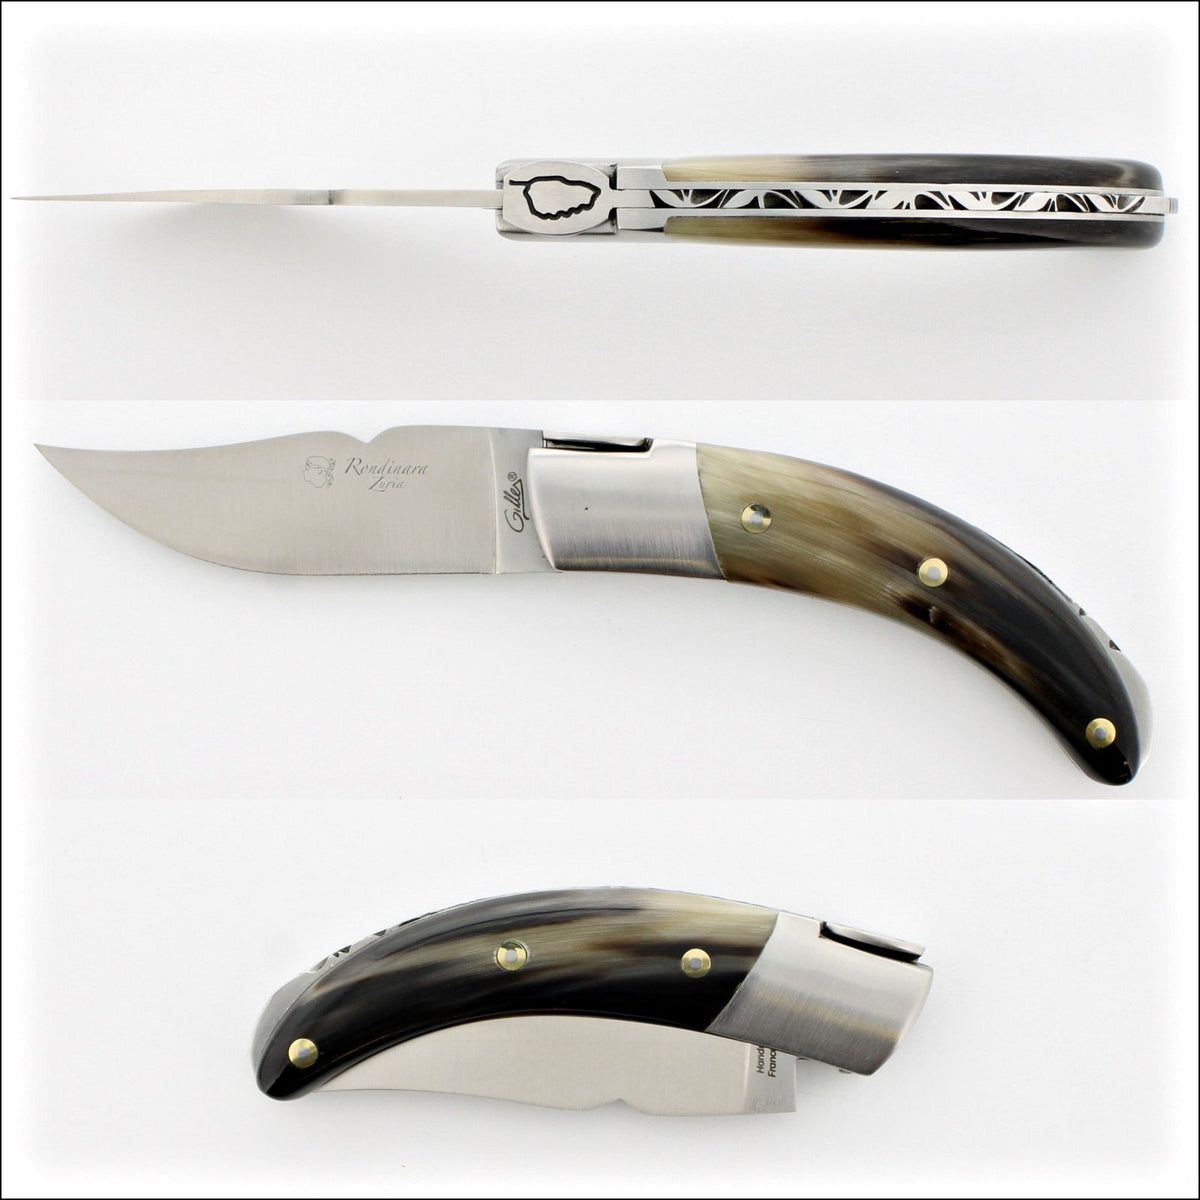 Corsican Rondinara Folding Knife - Flamed Horn Tip Handle